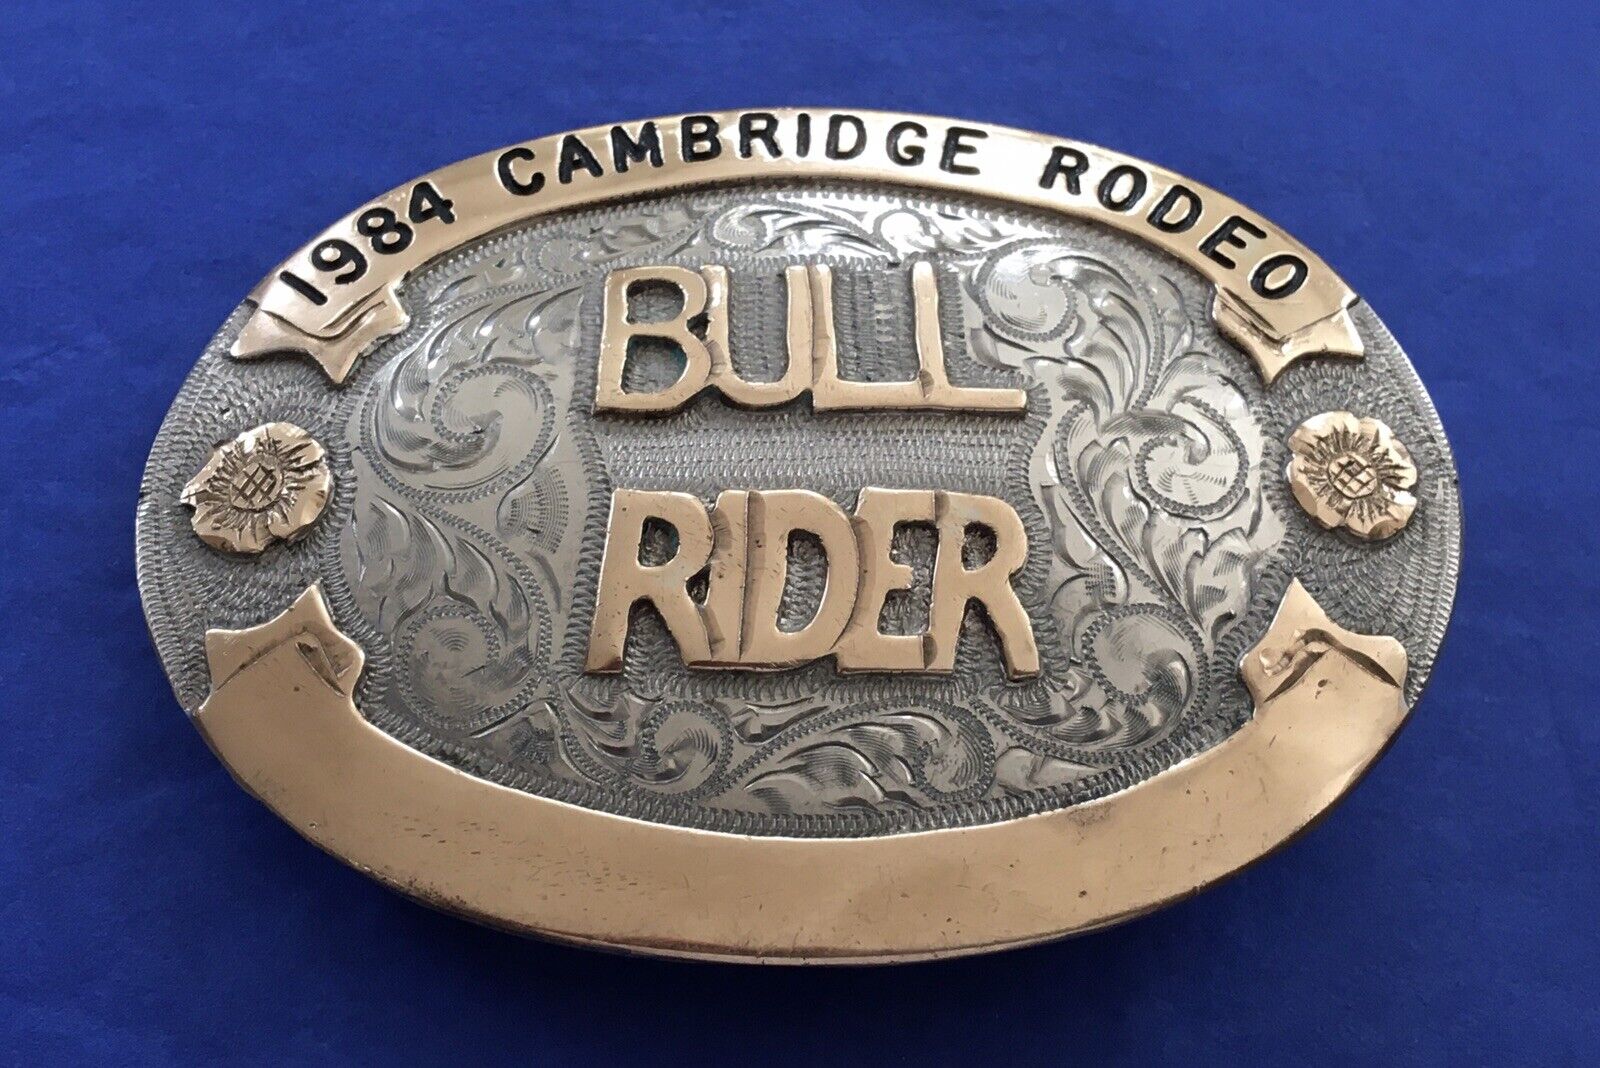 Vintage Rare Sedgwick Idaho 1984 Cambridge Rodeo Bull Rider Trophy Belt Buckle